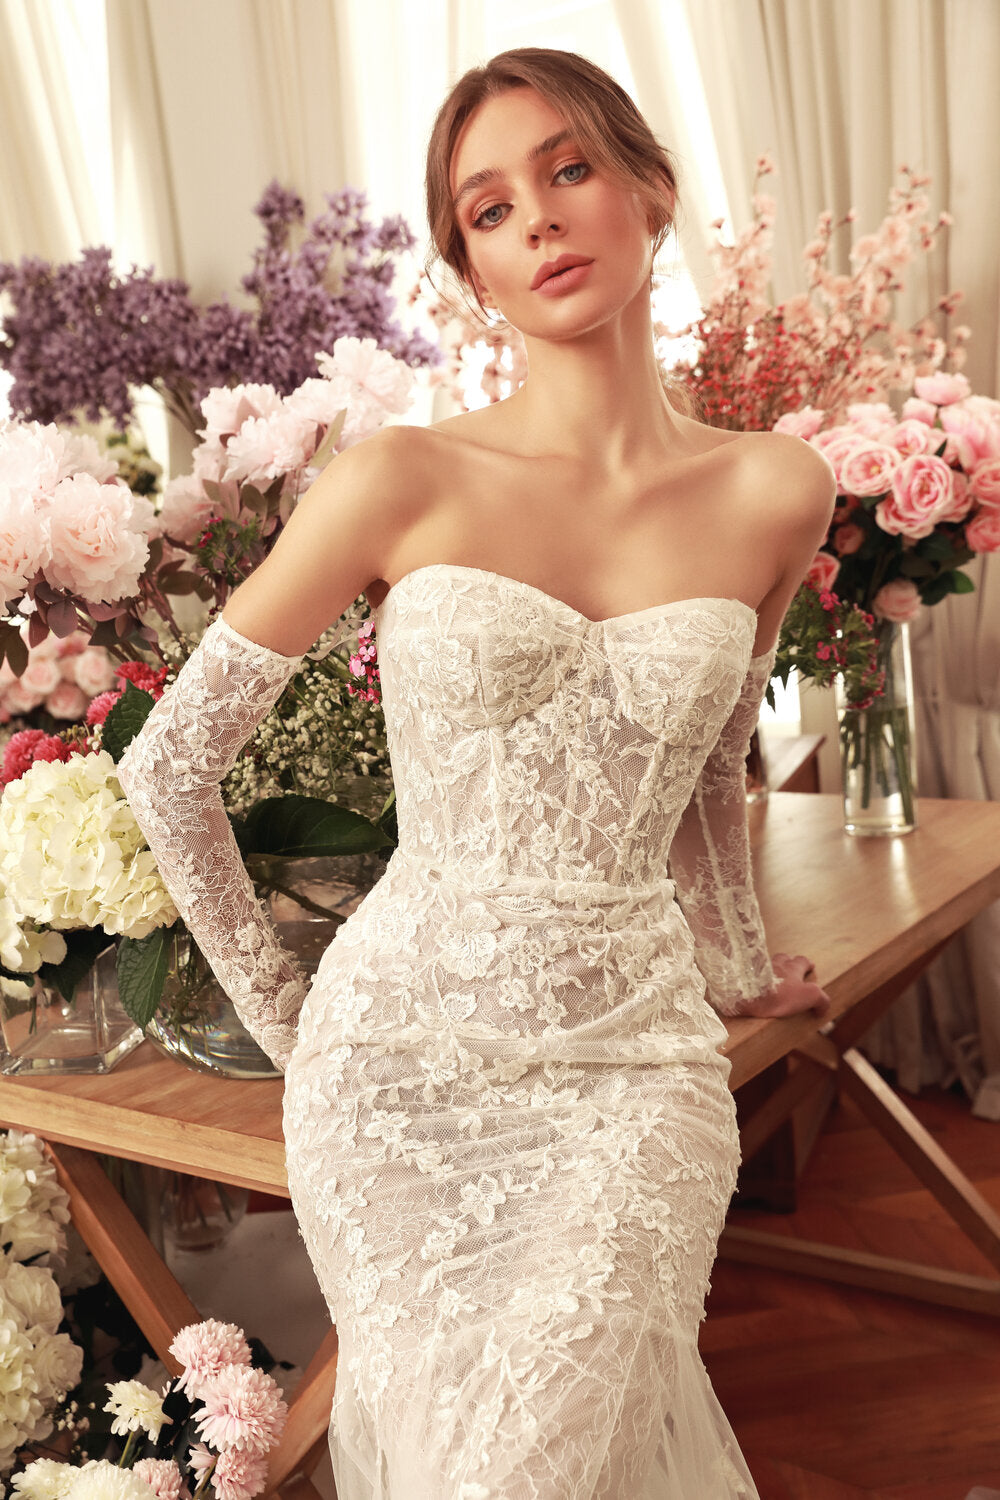 Off-the-shoulder corset wedding dress, Floral lace mermaid wedding dress